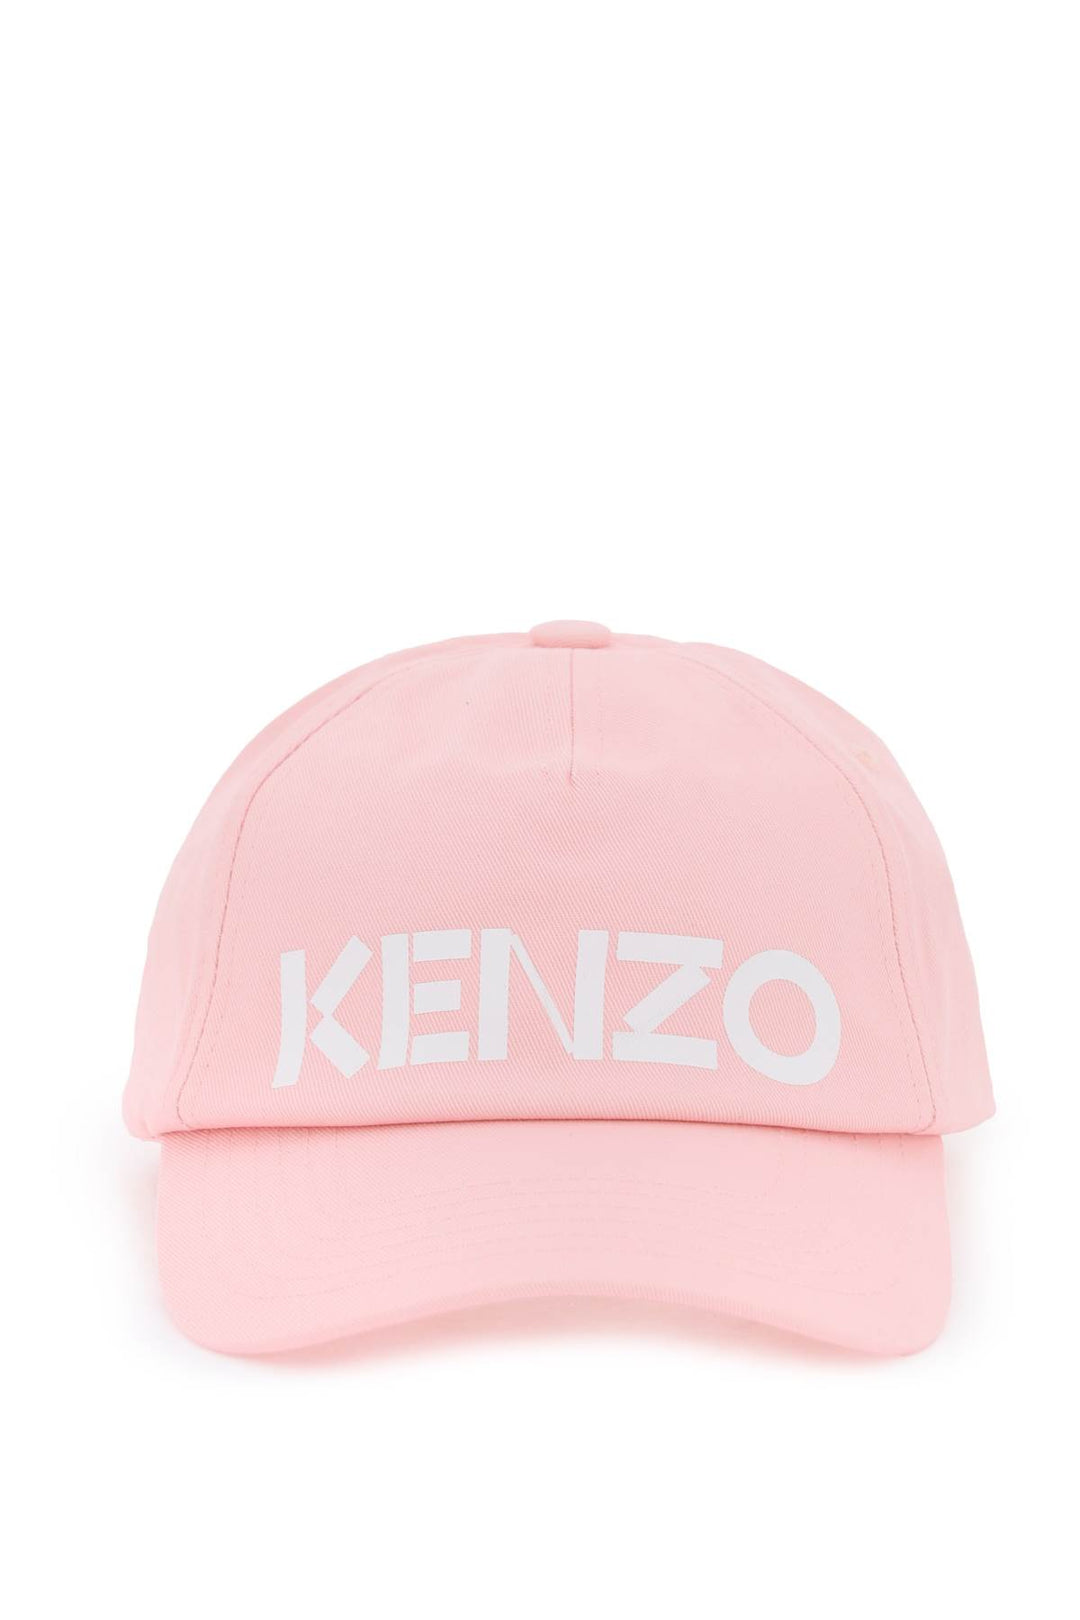 Kenzo Kenzography Baseball Cap   Rosa